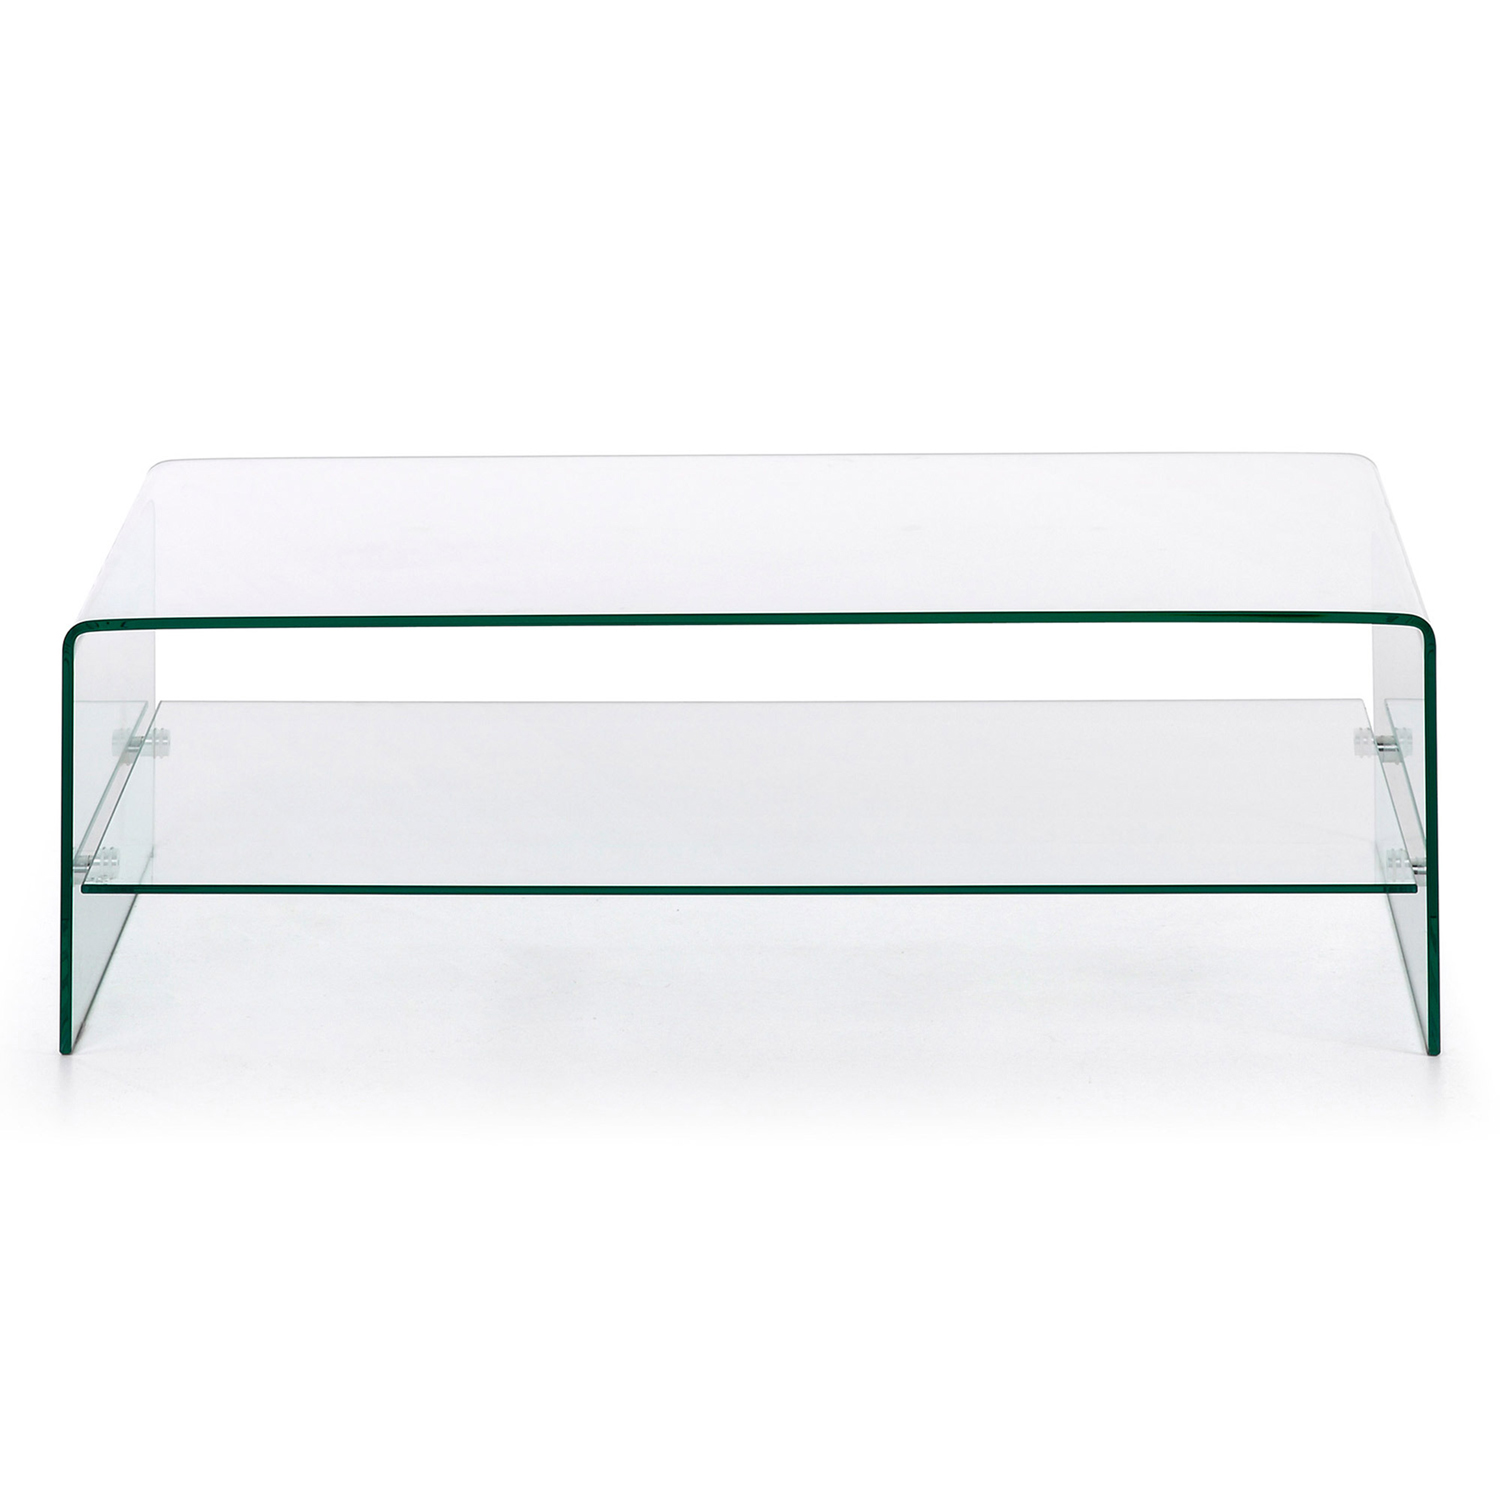 LAFORMA Burano sofabord, m. hylde - klar glas (110x55)